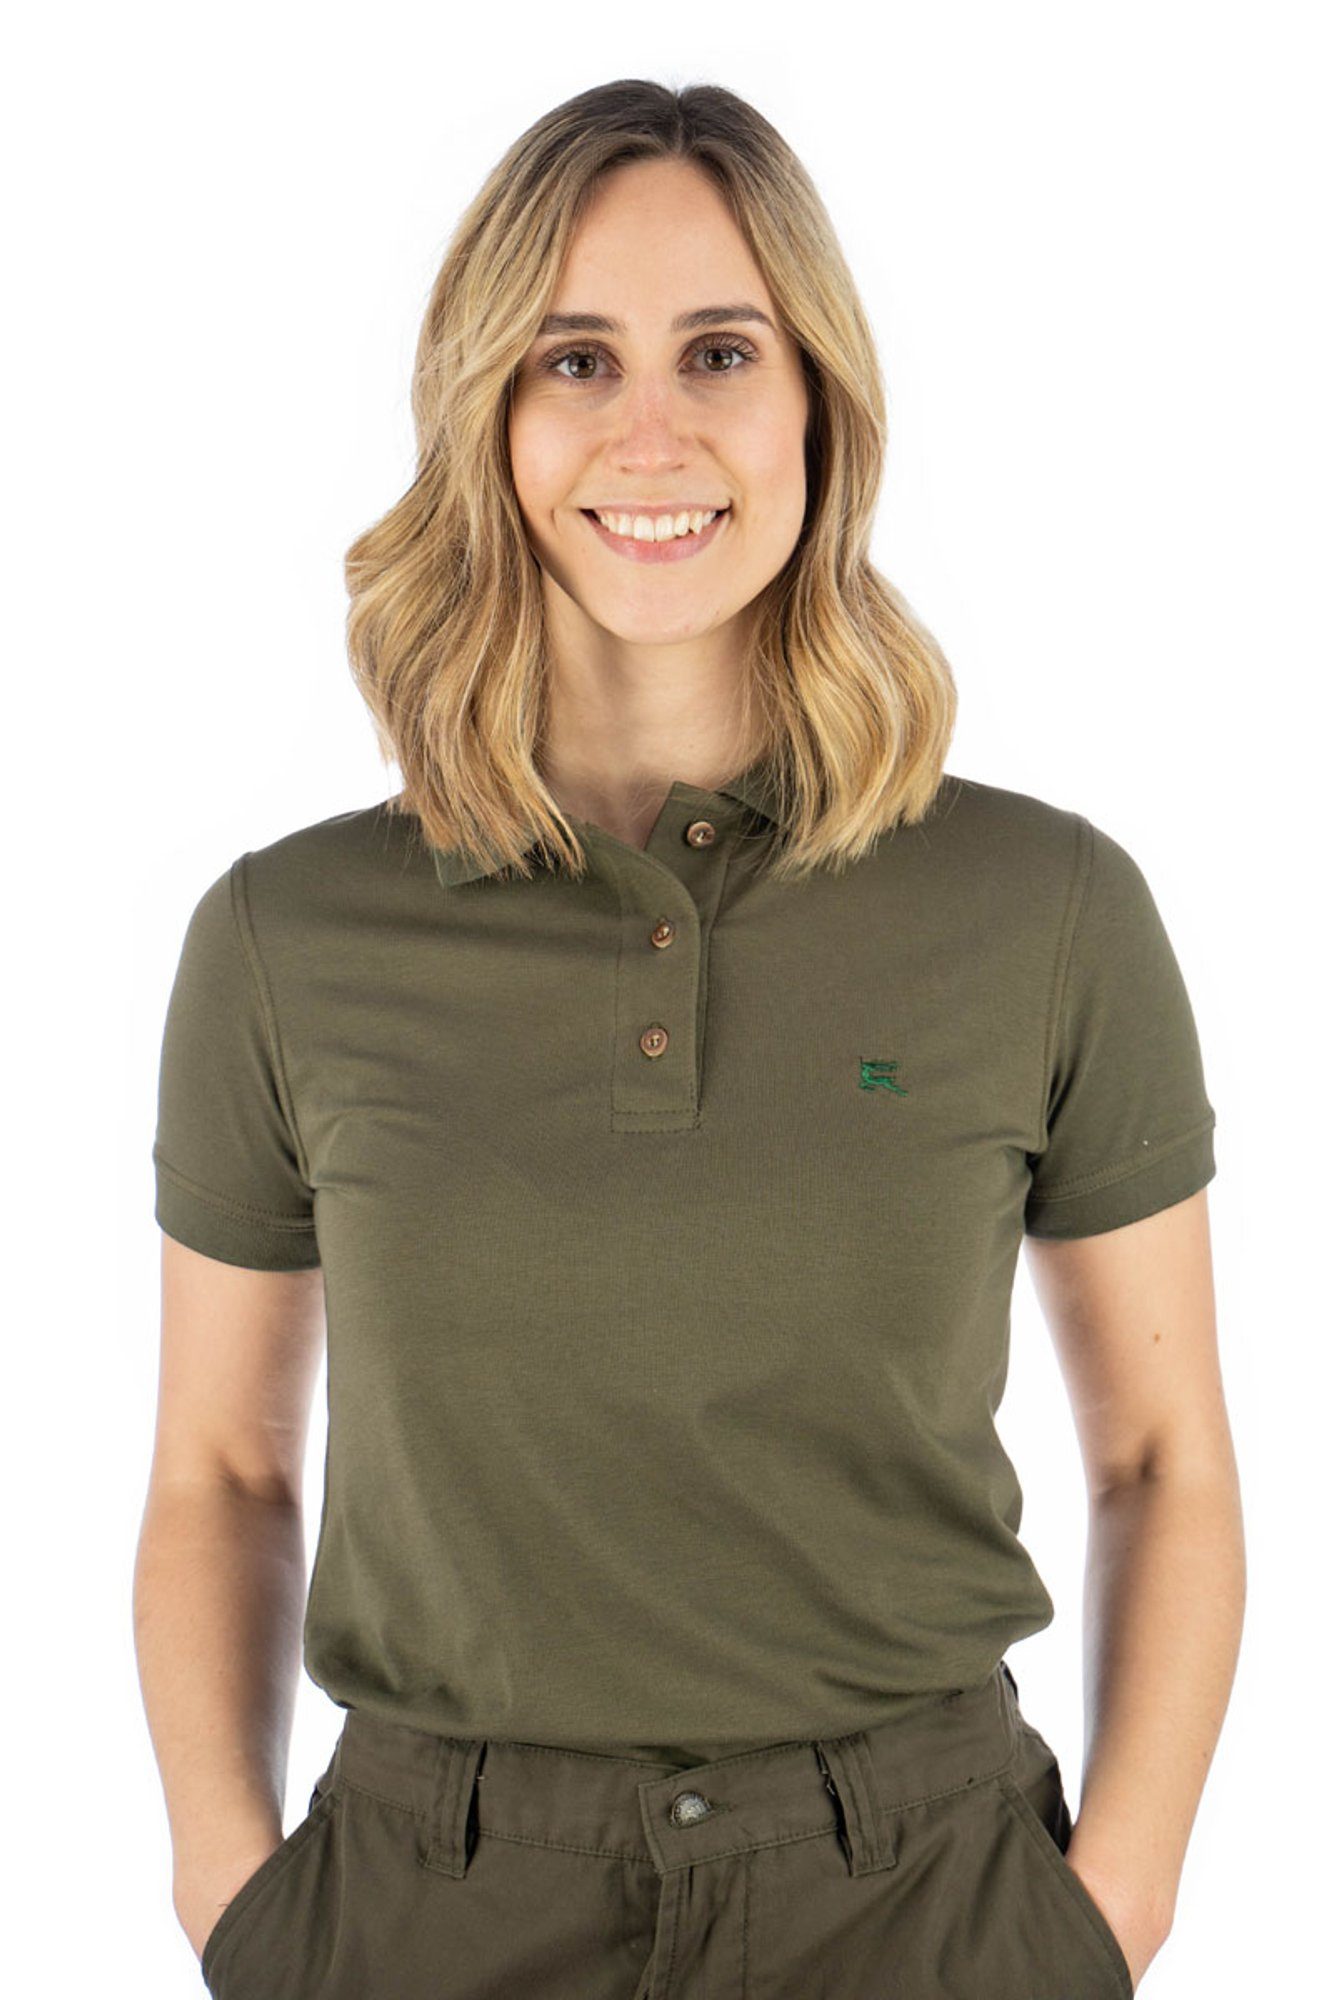 OS-Trachten Poloshirt Laukas Kurzarm Shirt mit Hirsch-Stickerei auf der linken Brust oliv